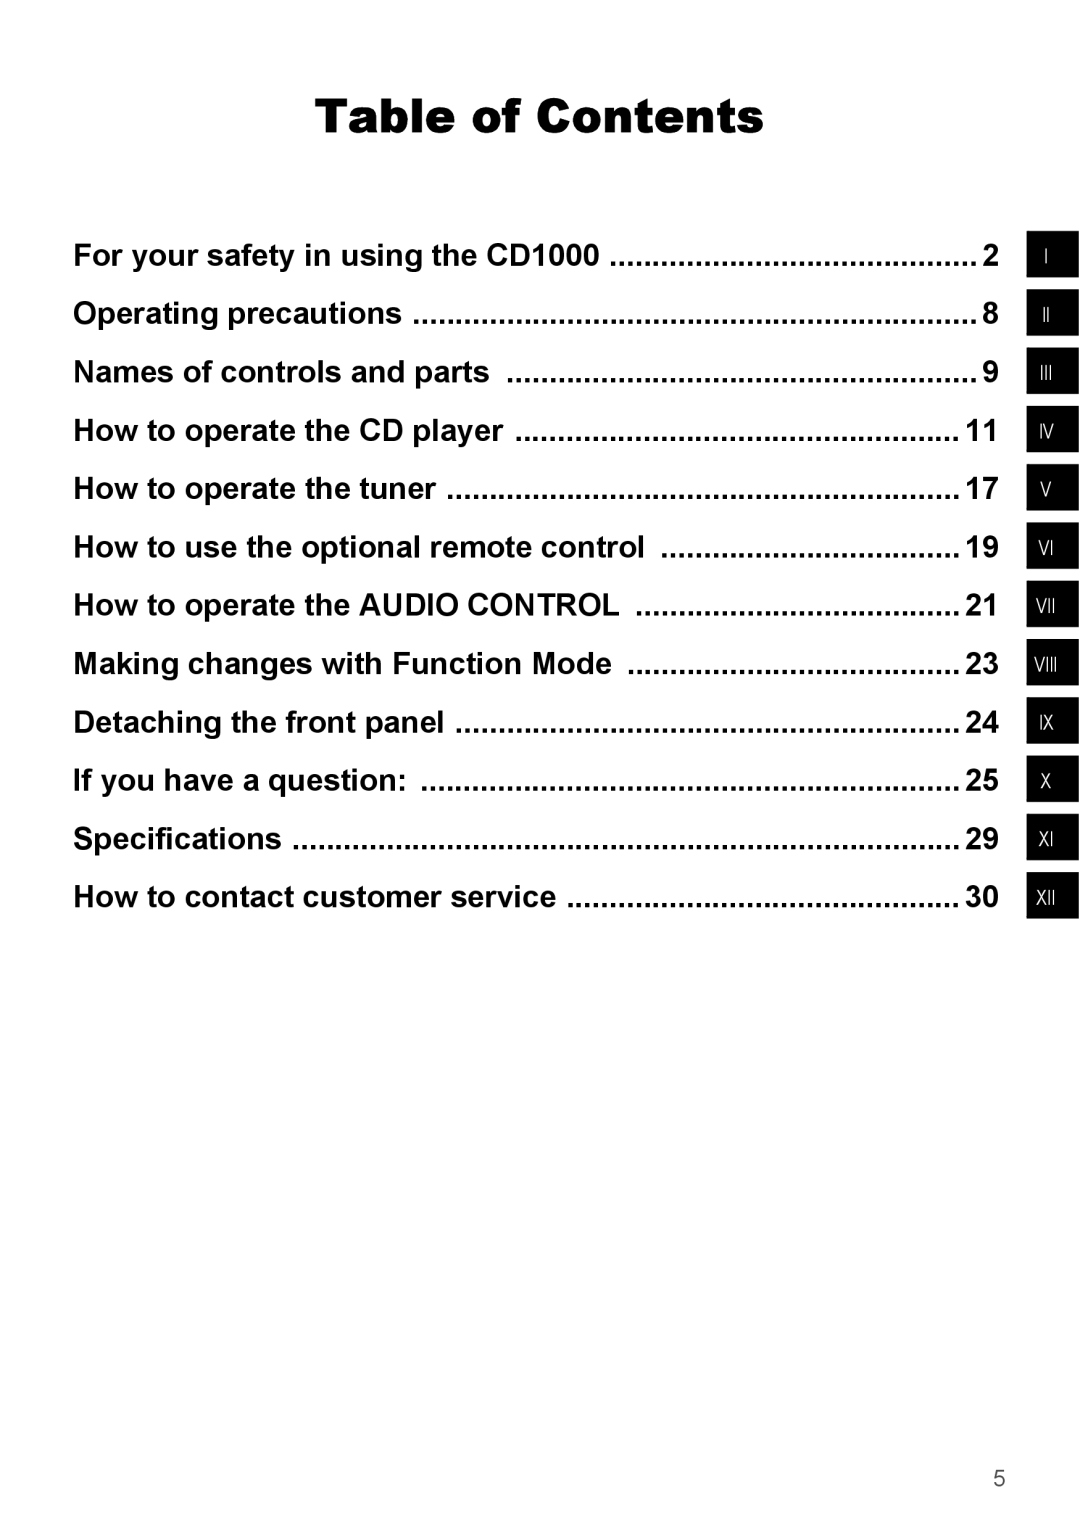 Eclipse - Fujitsu Ten CD1000 manual Table of Contents 